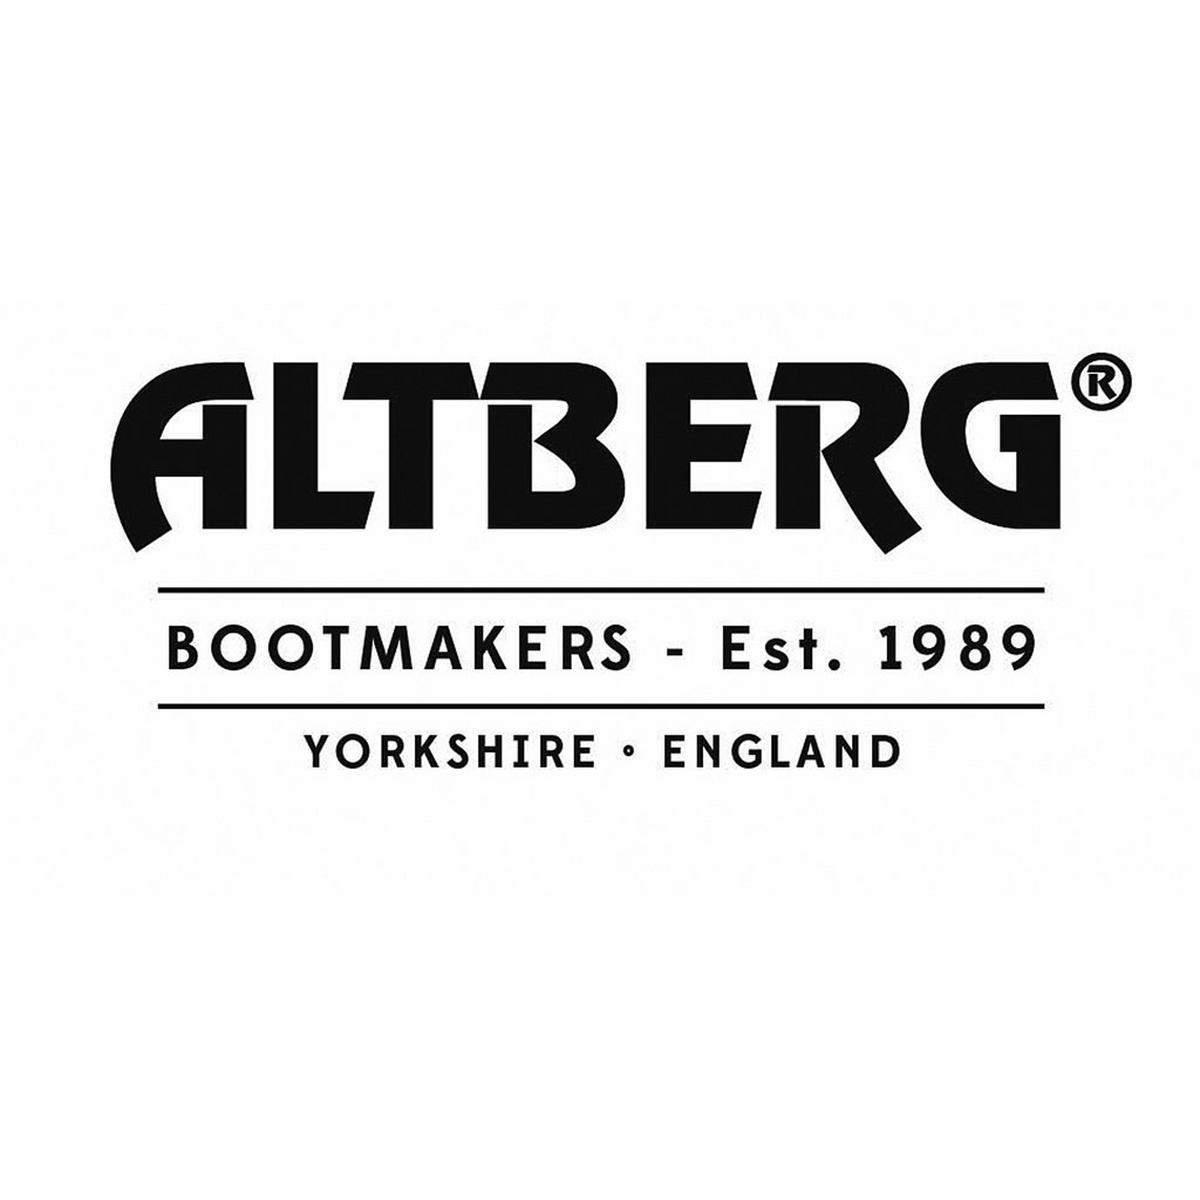 Altberg Leder-Gris Wax Oil - Military Brown - 80g